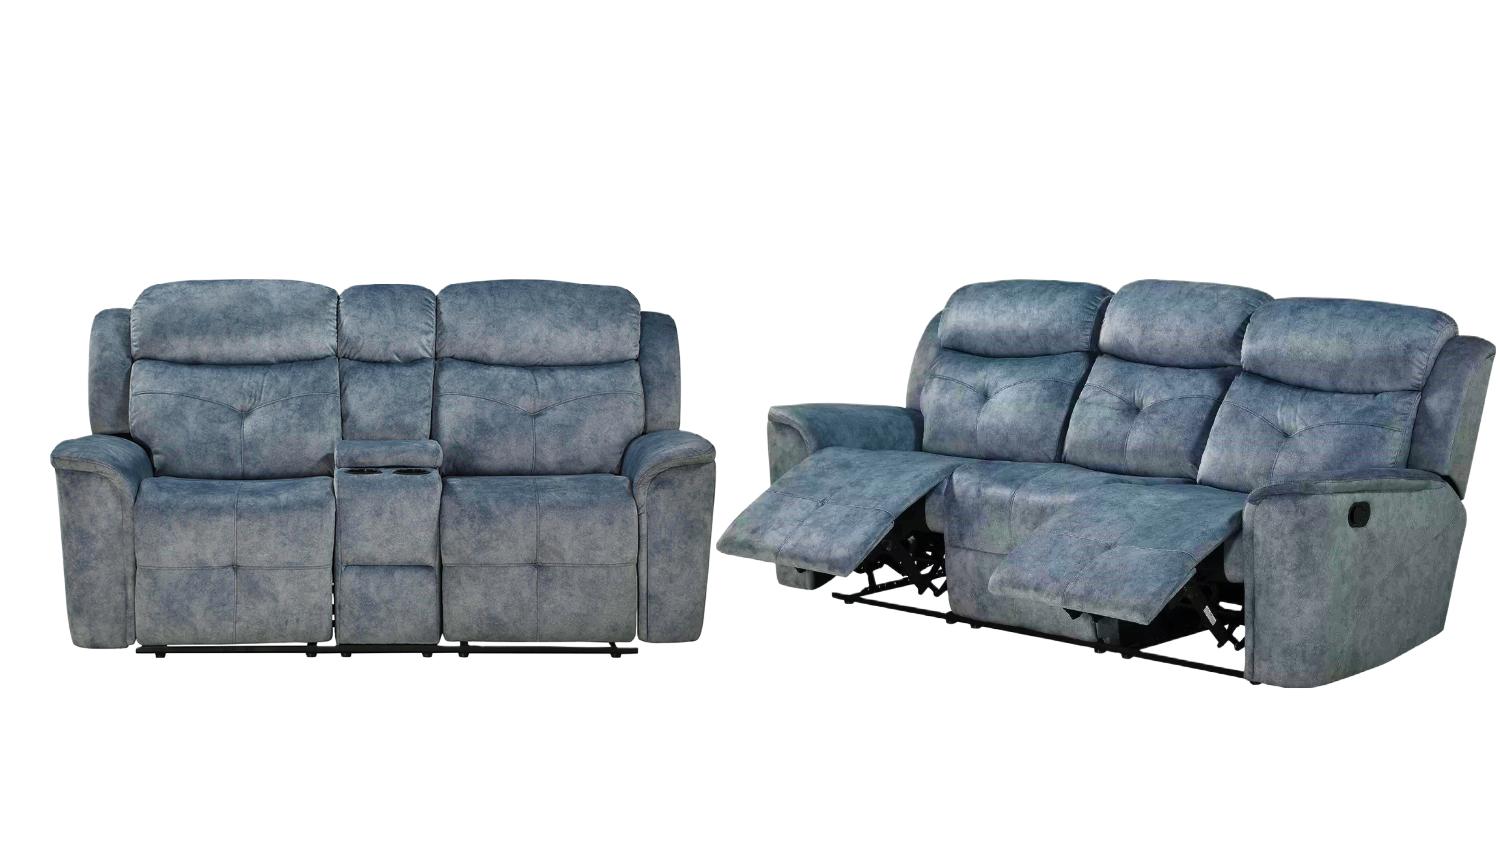 Modern Sofa and Loveseat Mariana 55035-2pcs in Blue Fabric